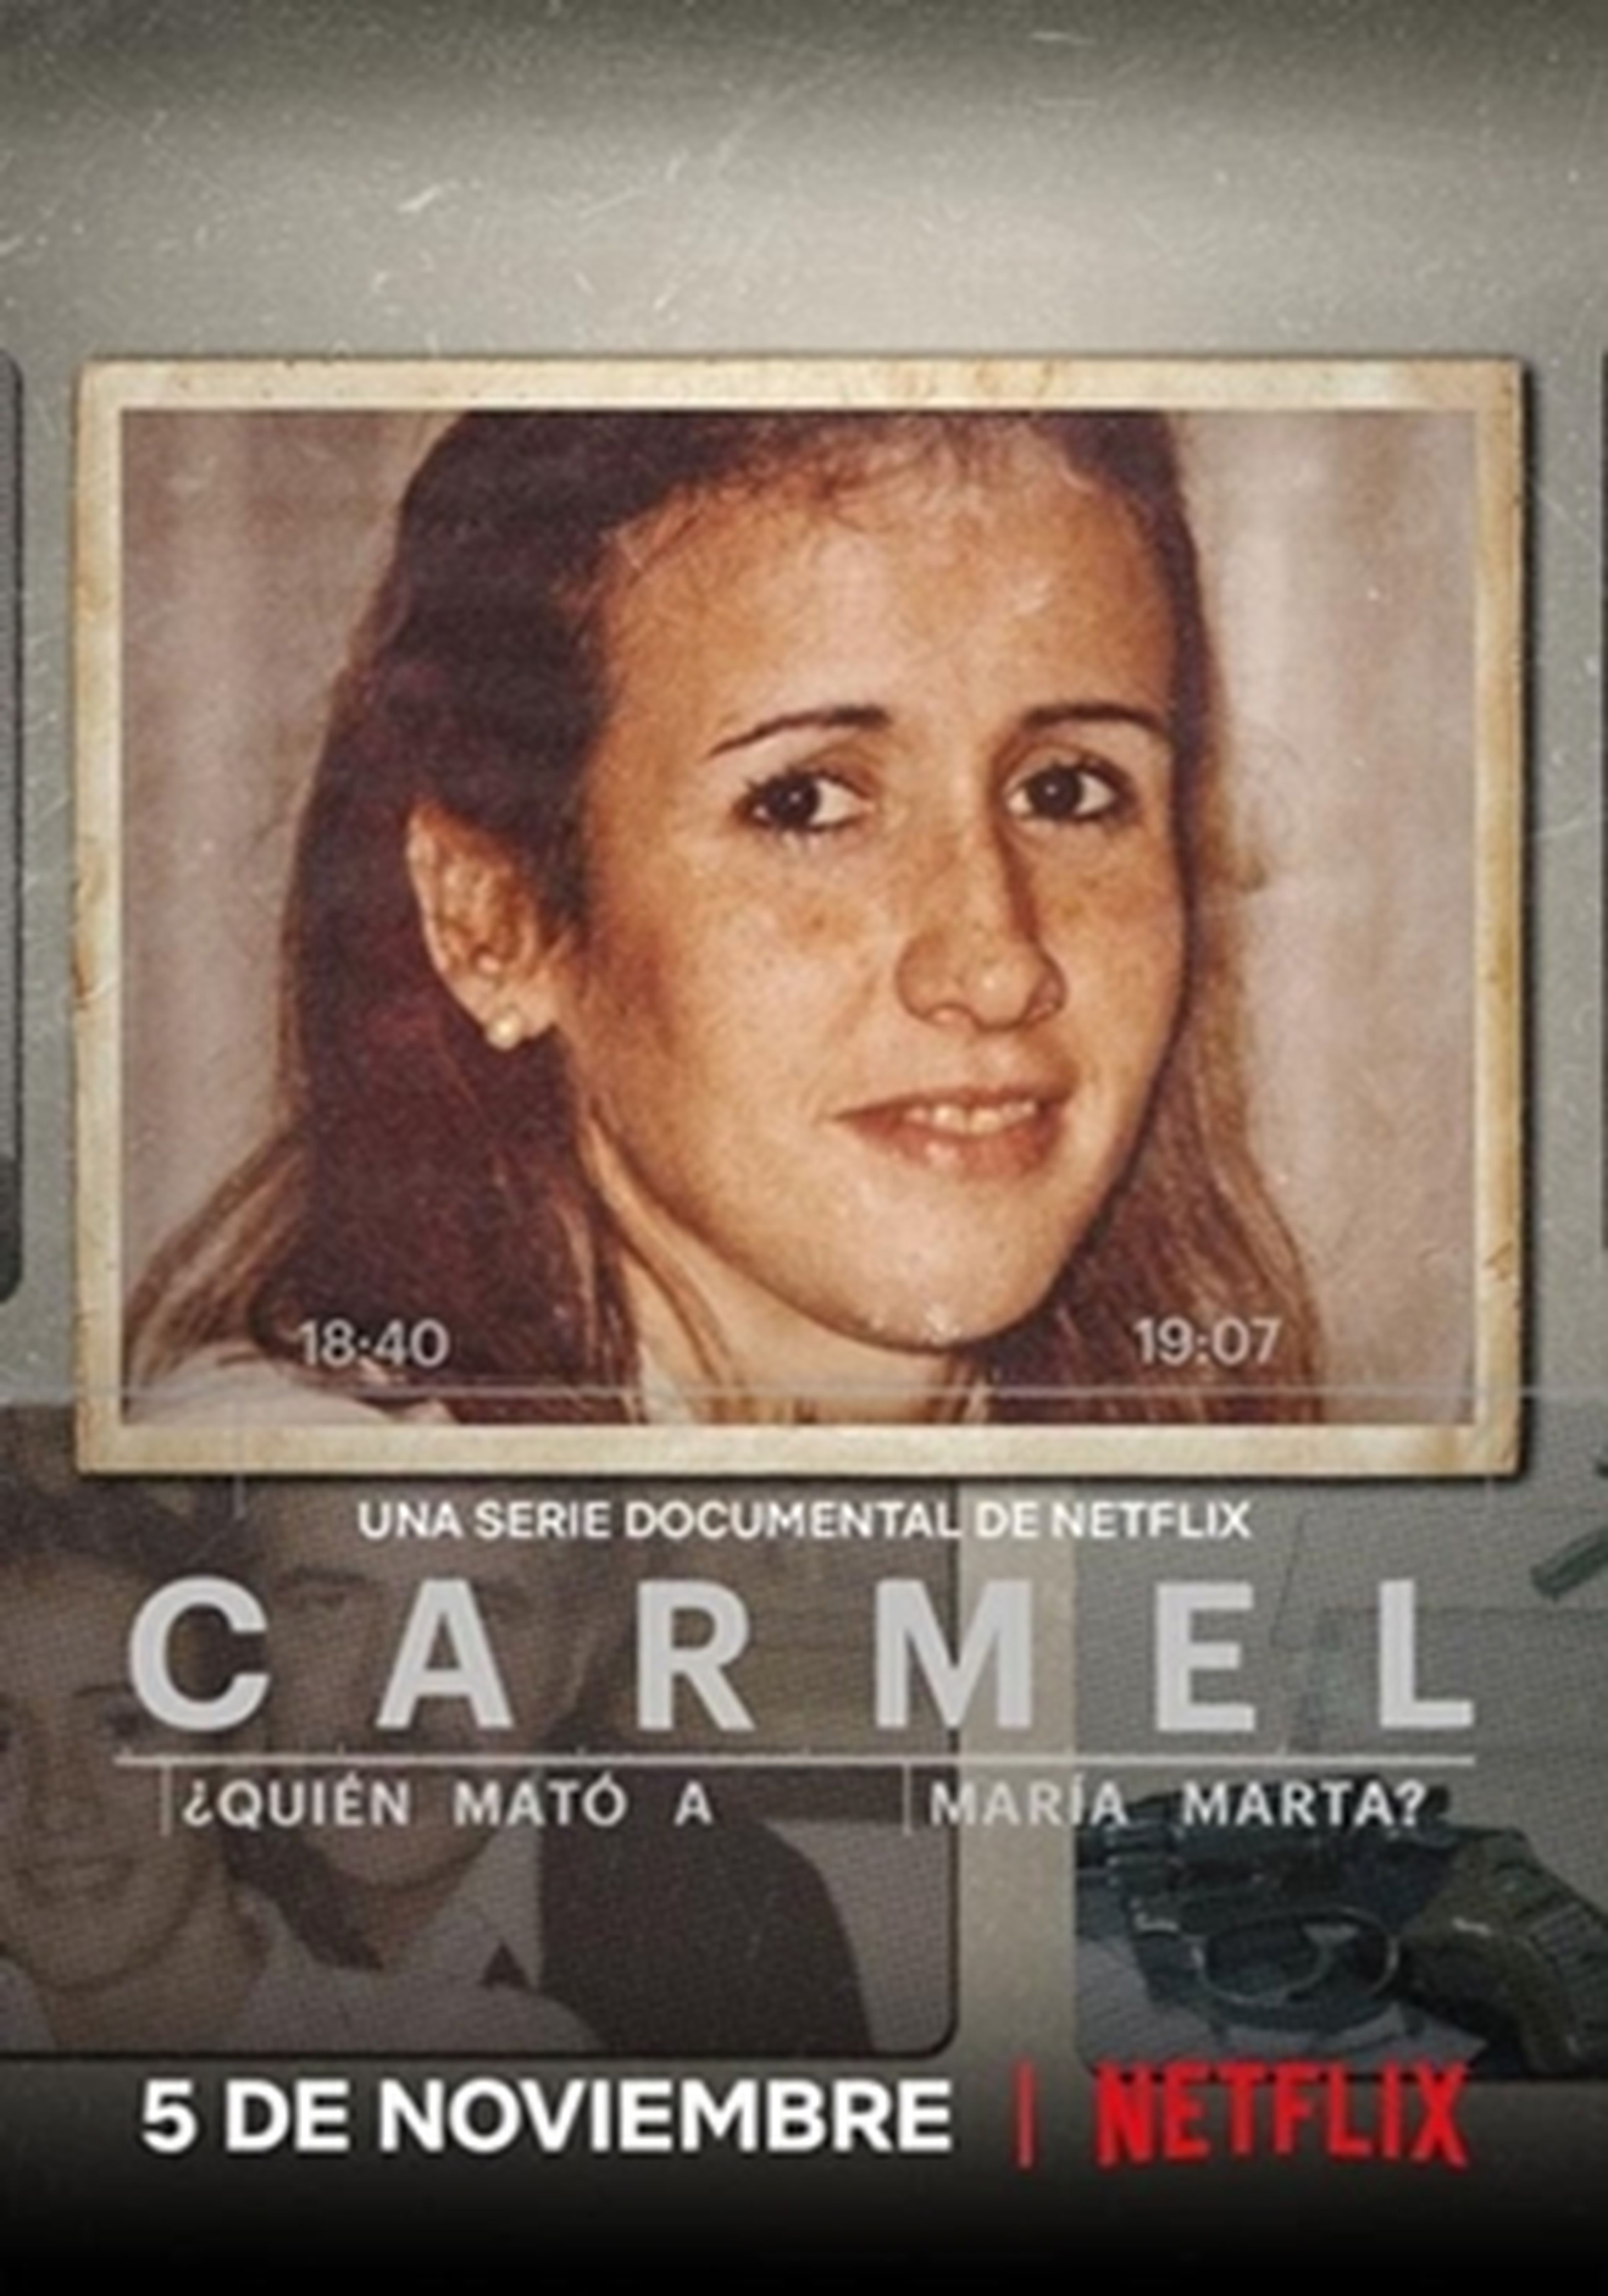 Carmel quien mató a María Marta cartel